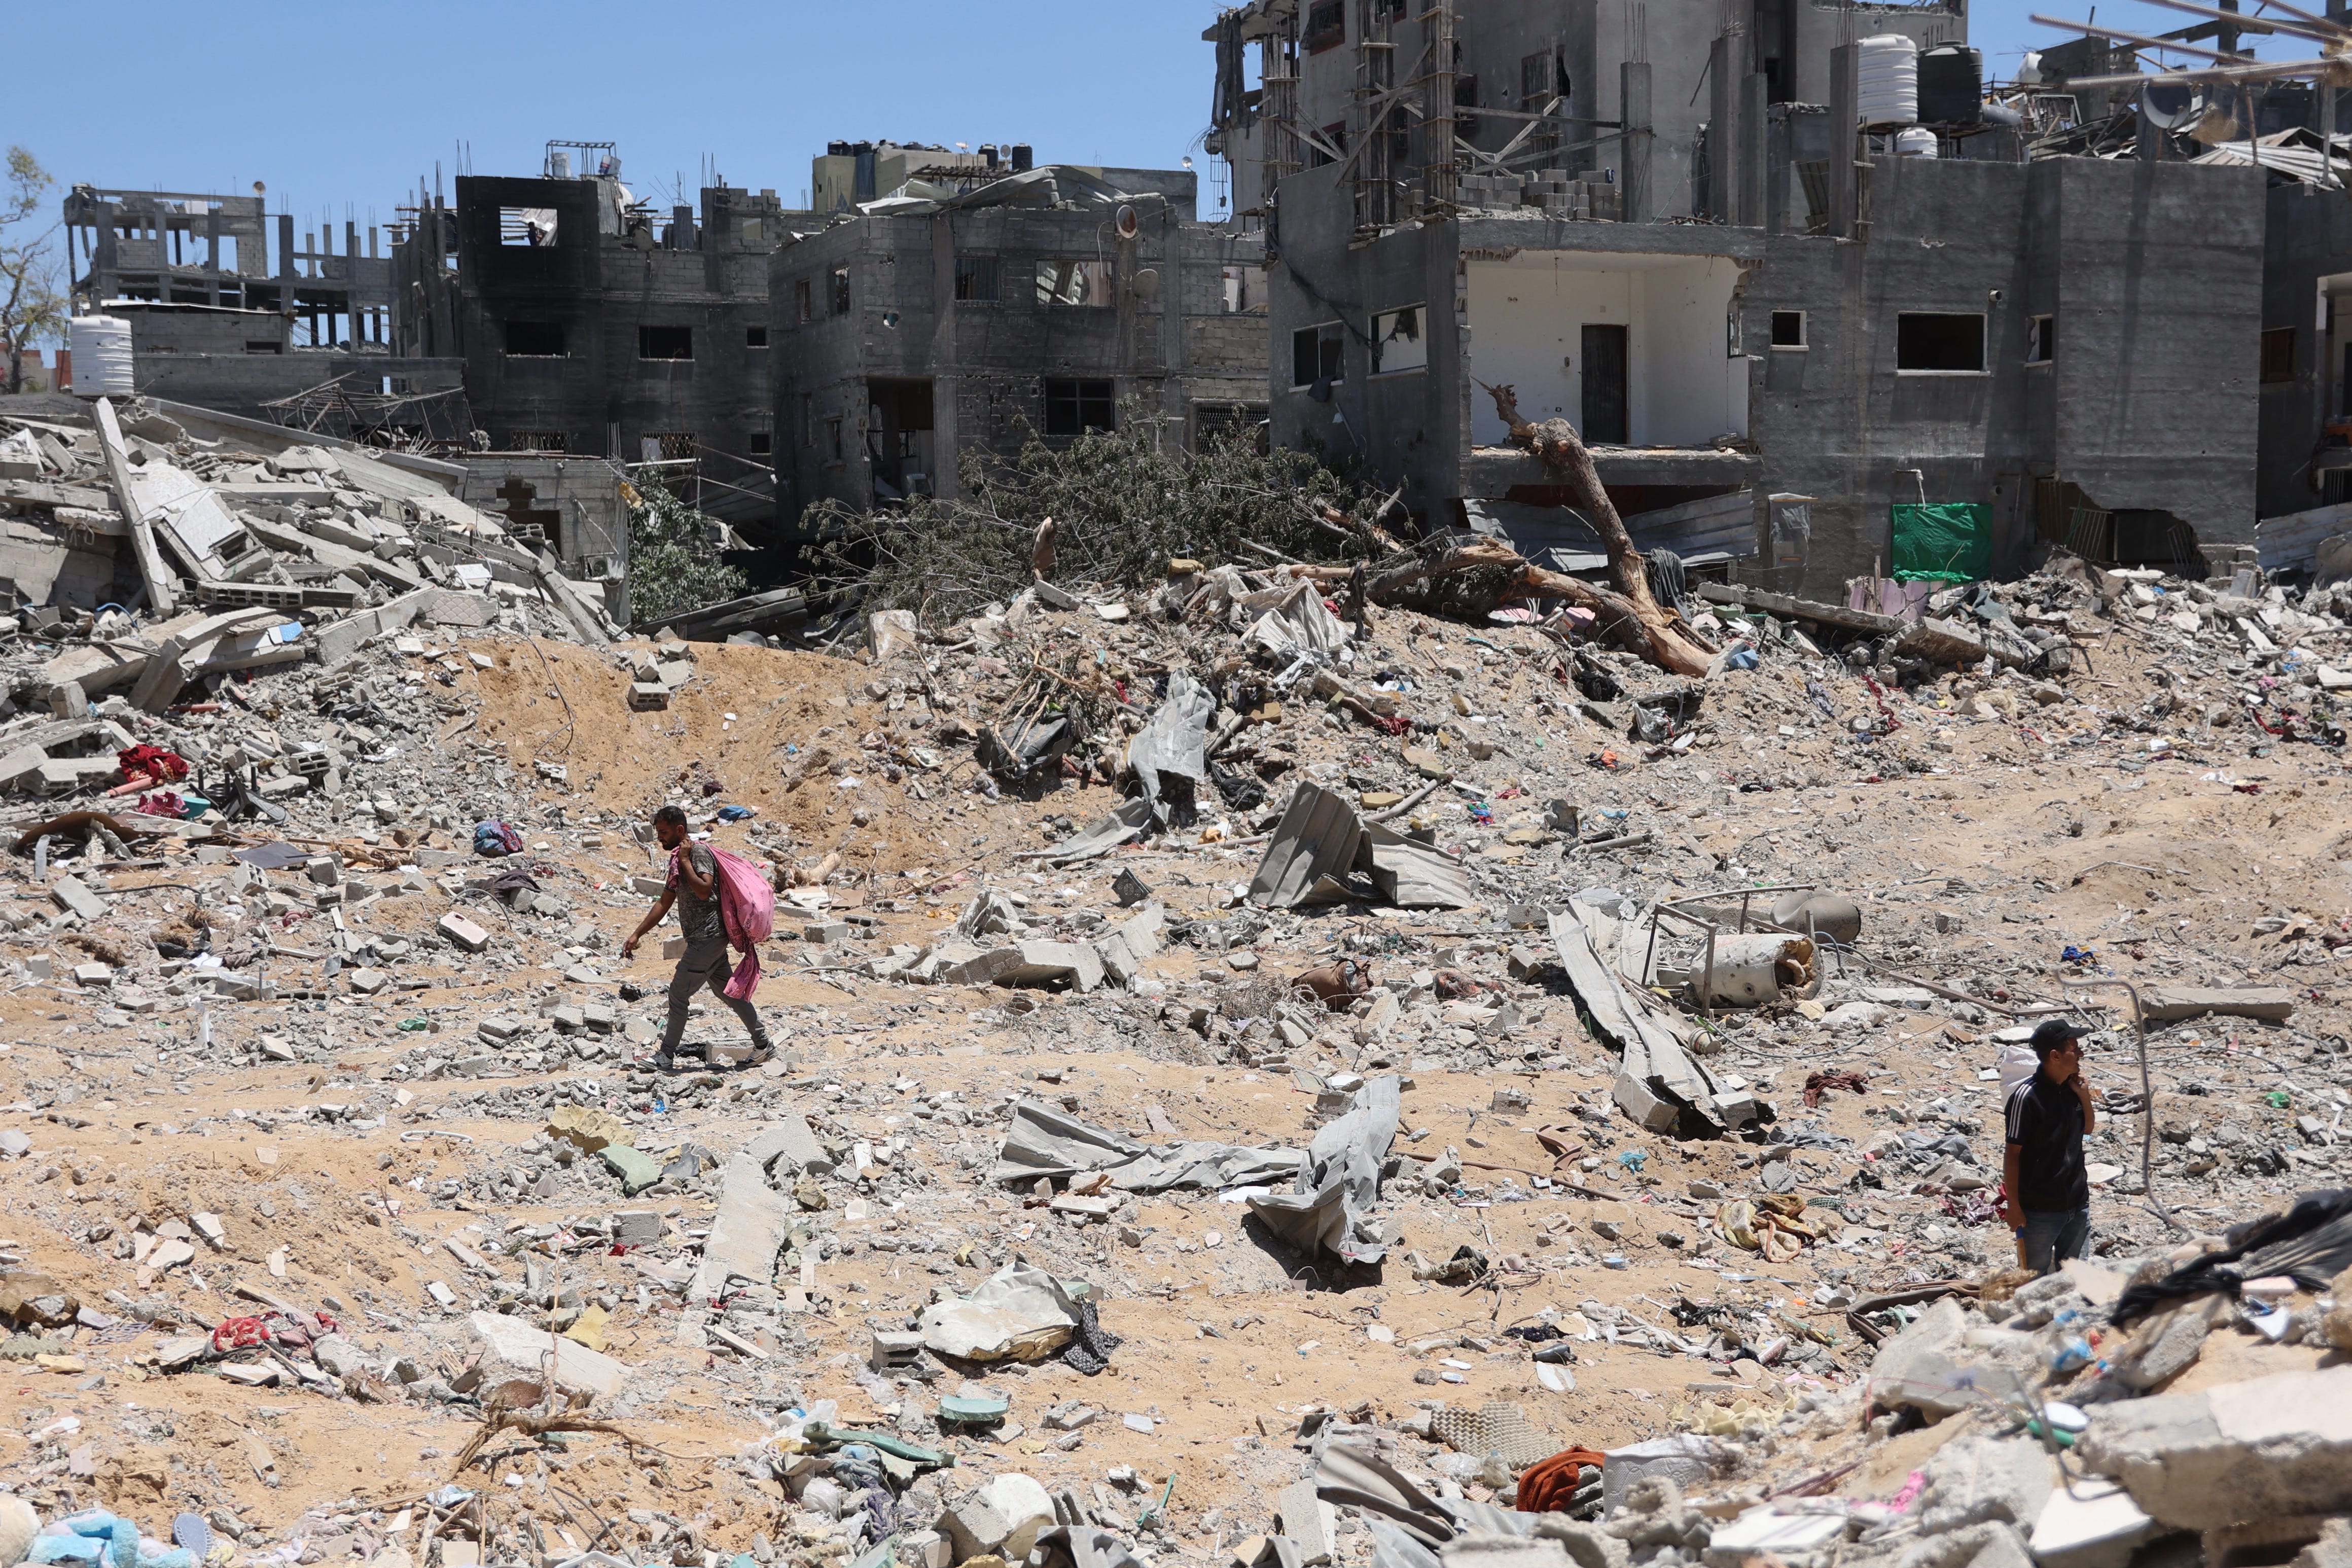 Israel's Netanyahu says no Gaza ceasefire until Hamas destroyed